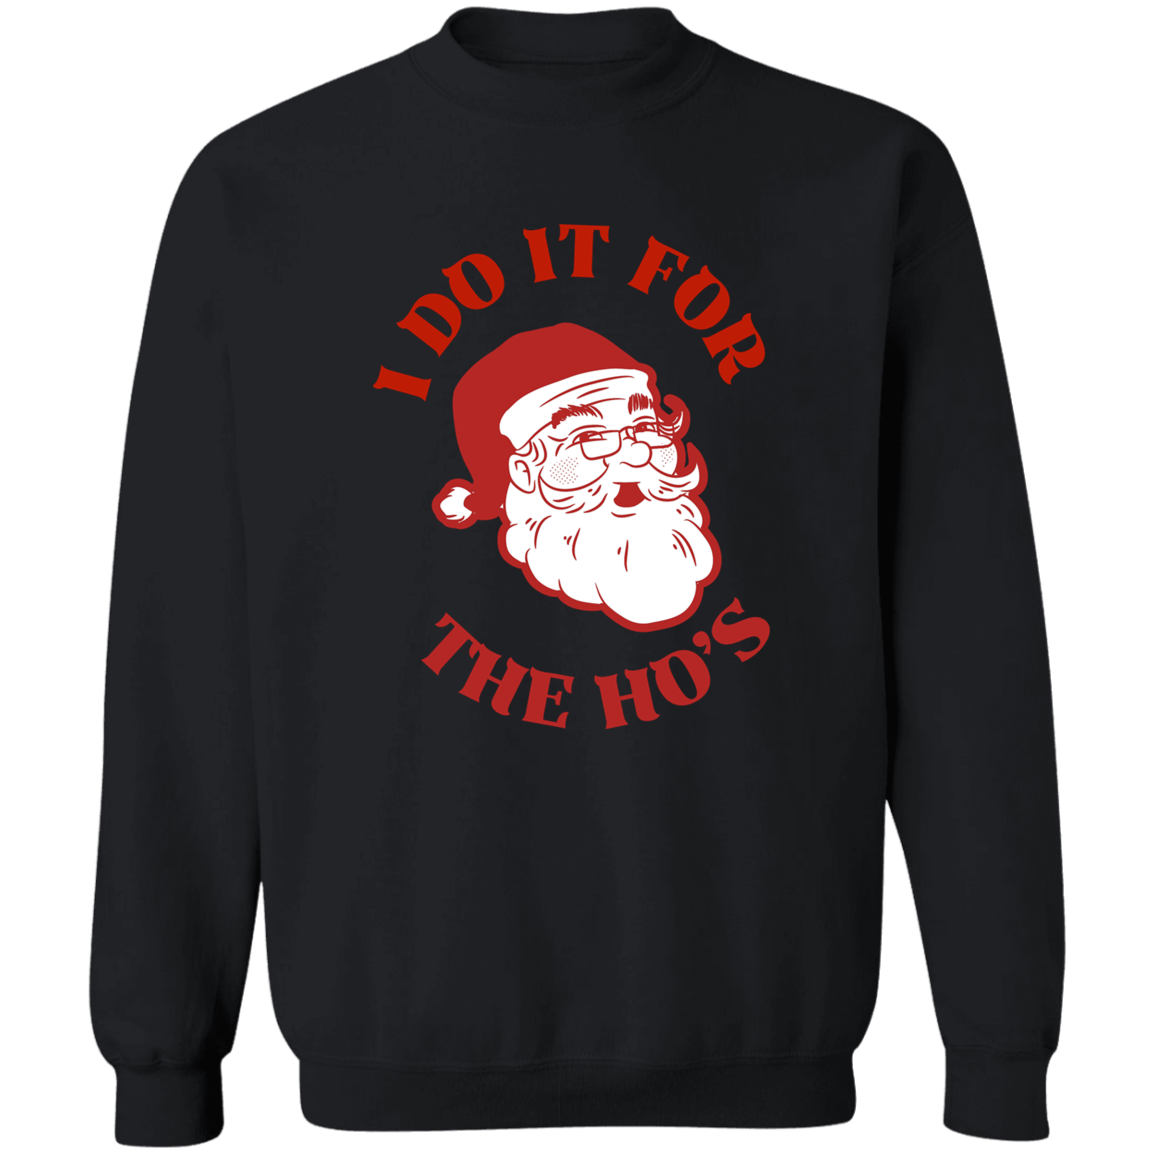 I DO IT FOR THE HO's  Sweatshirt